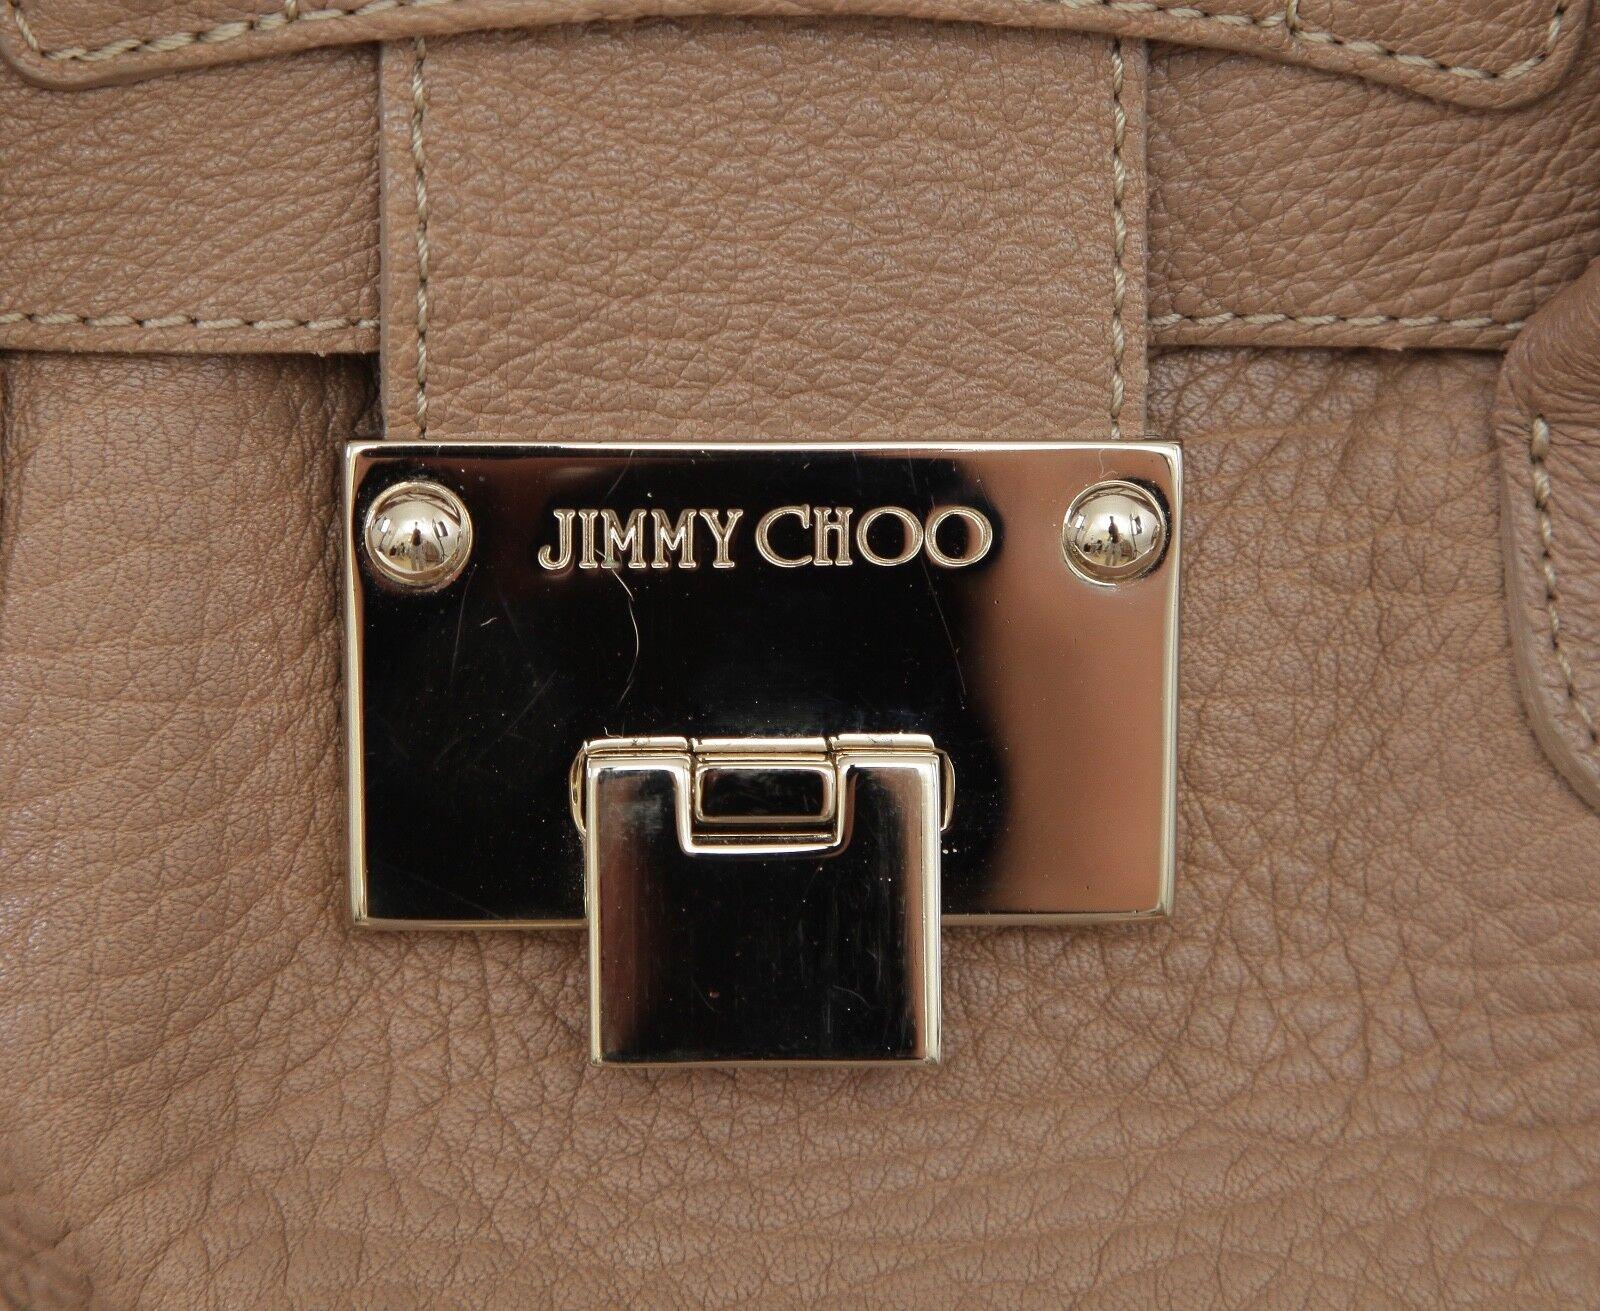 JIMMY CHOO Bag Tan Leather Large ROSABEL Satchel Tote Shoulder Strap Gold HW In Good Condition For Sale In Hollywood, FL